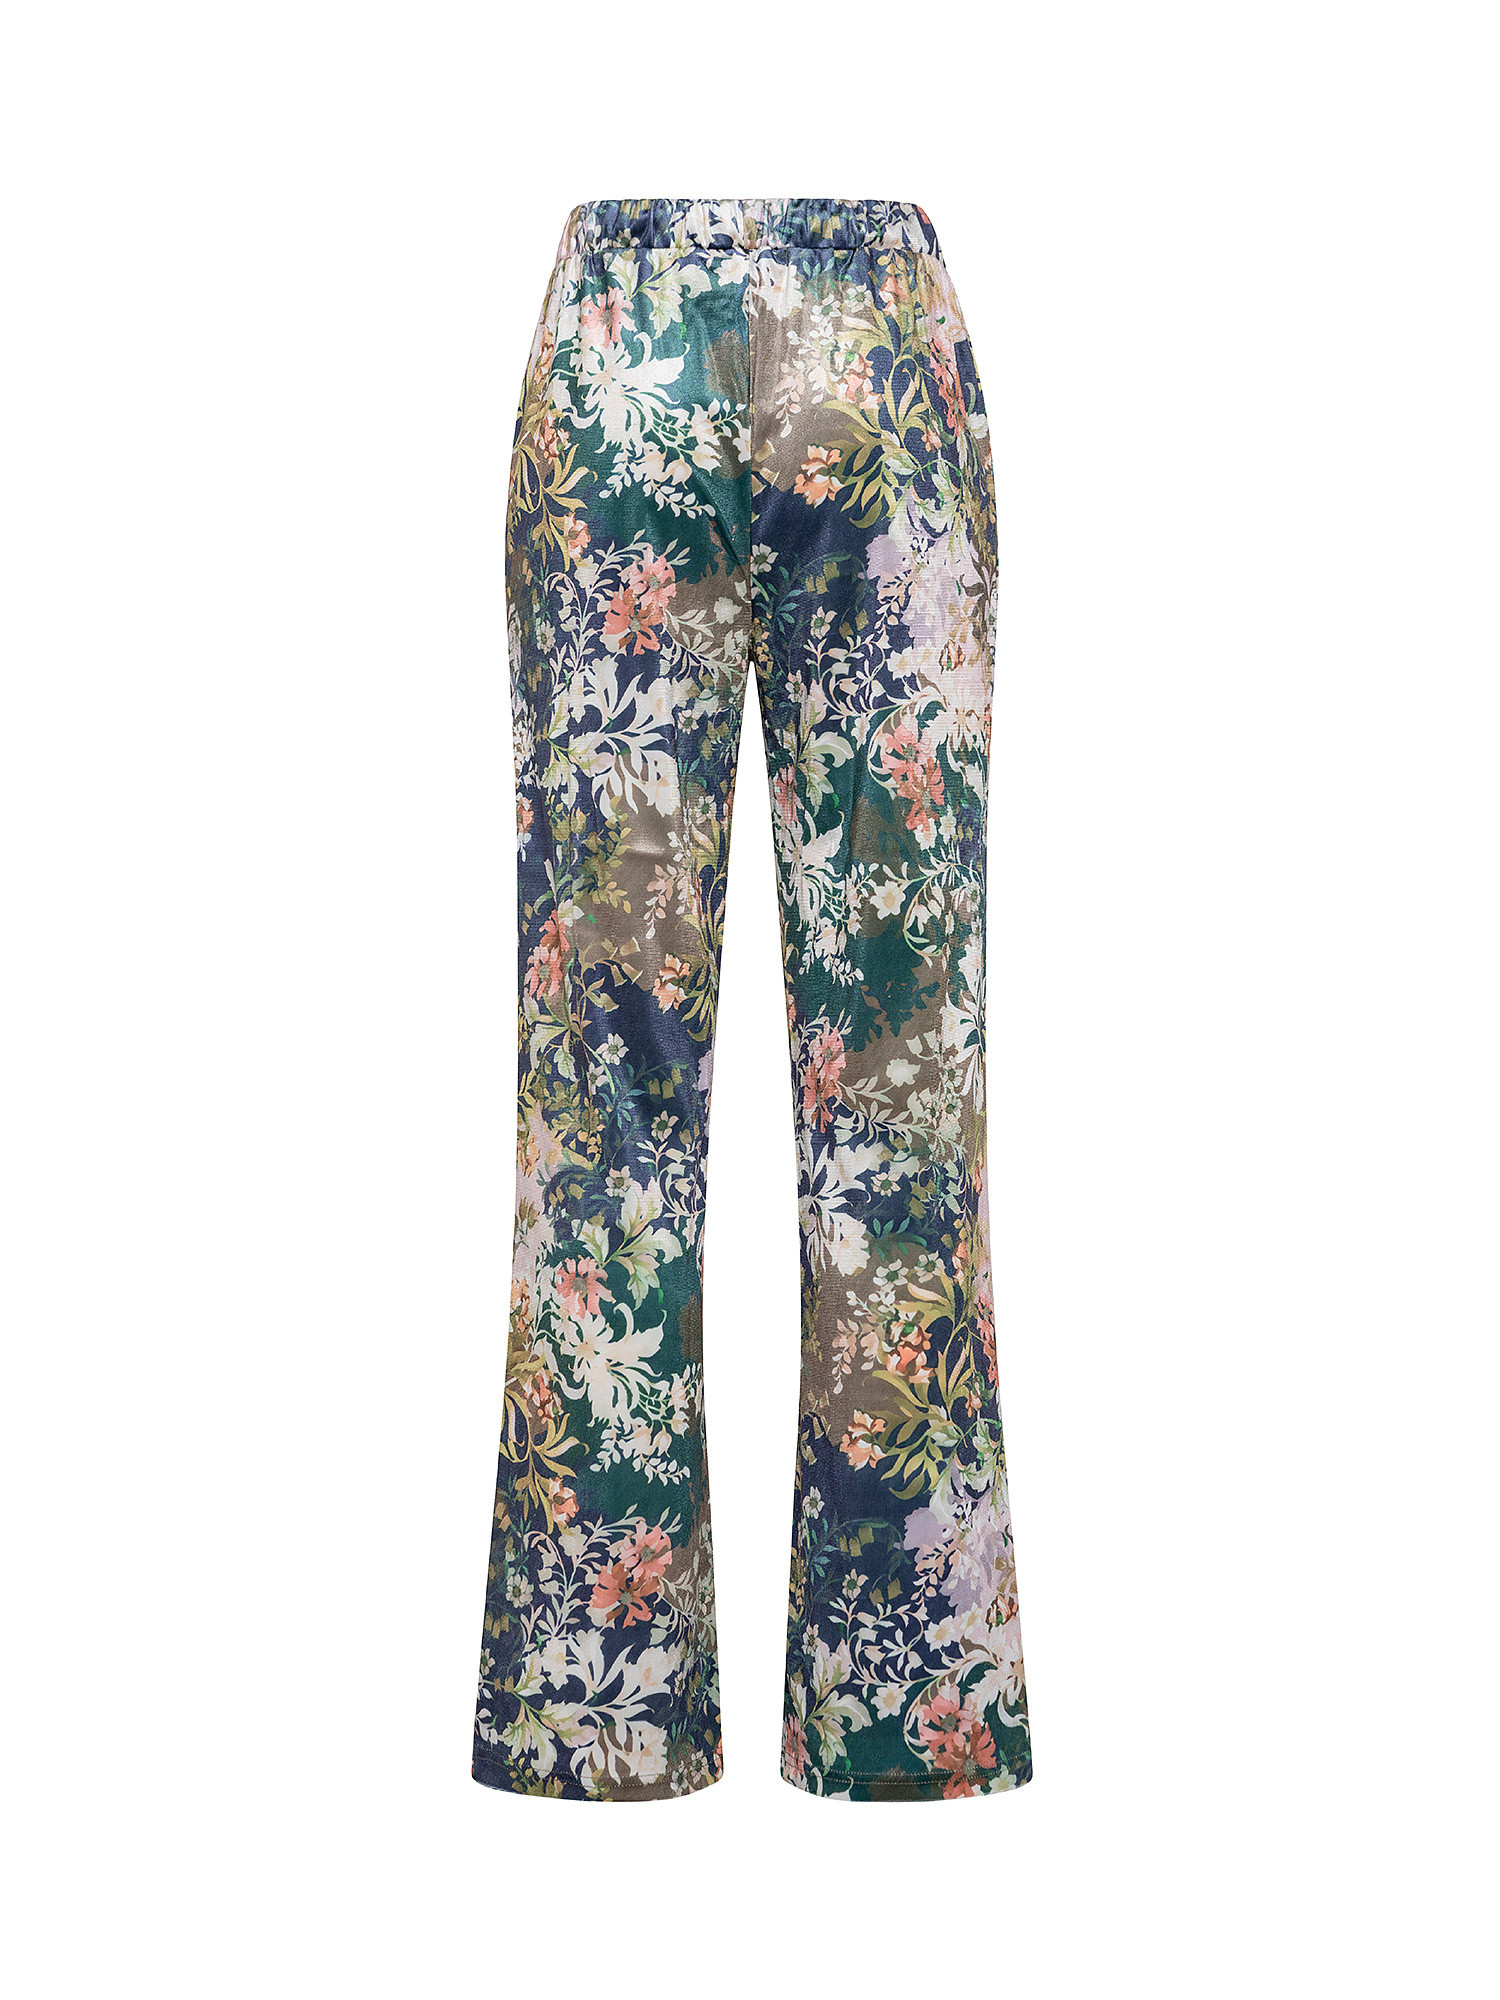 Pantalone in velour con stampa floreale, Multicolor, large